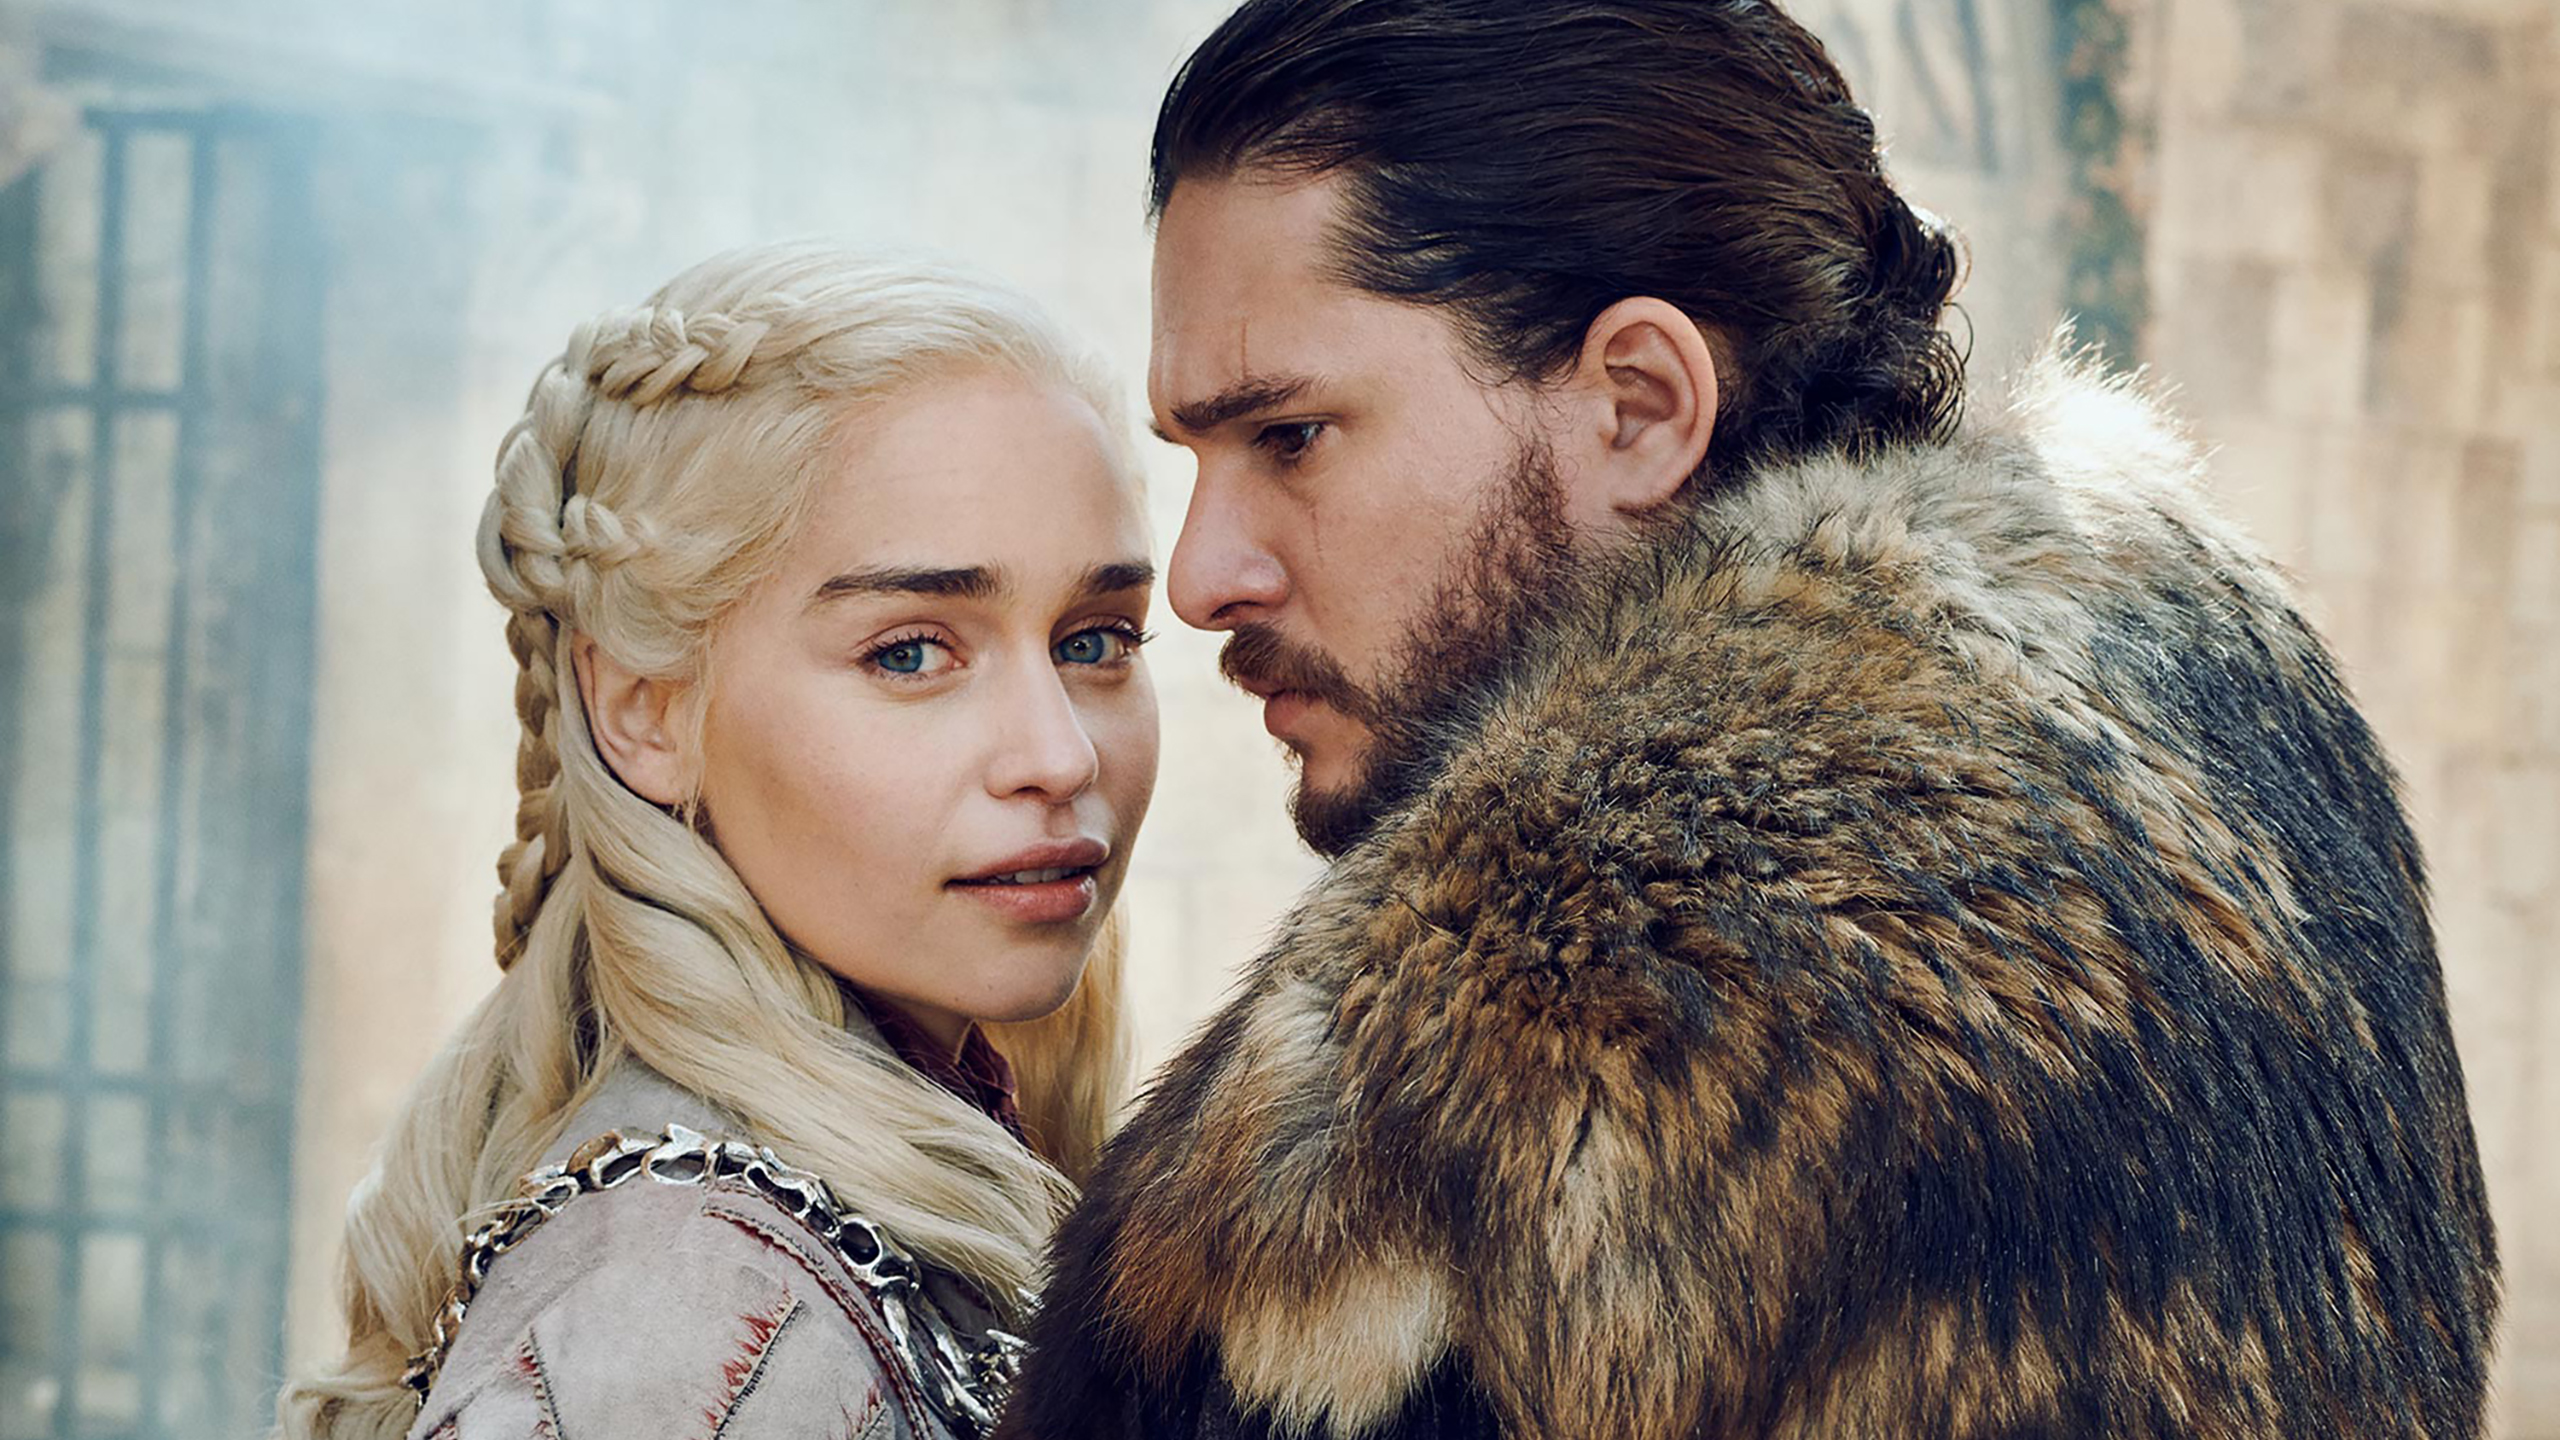 Jon Snow Daenerys Targaryen in GOT Season 8 Wallpapers